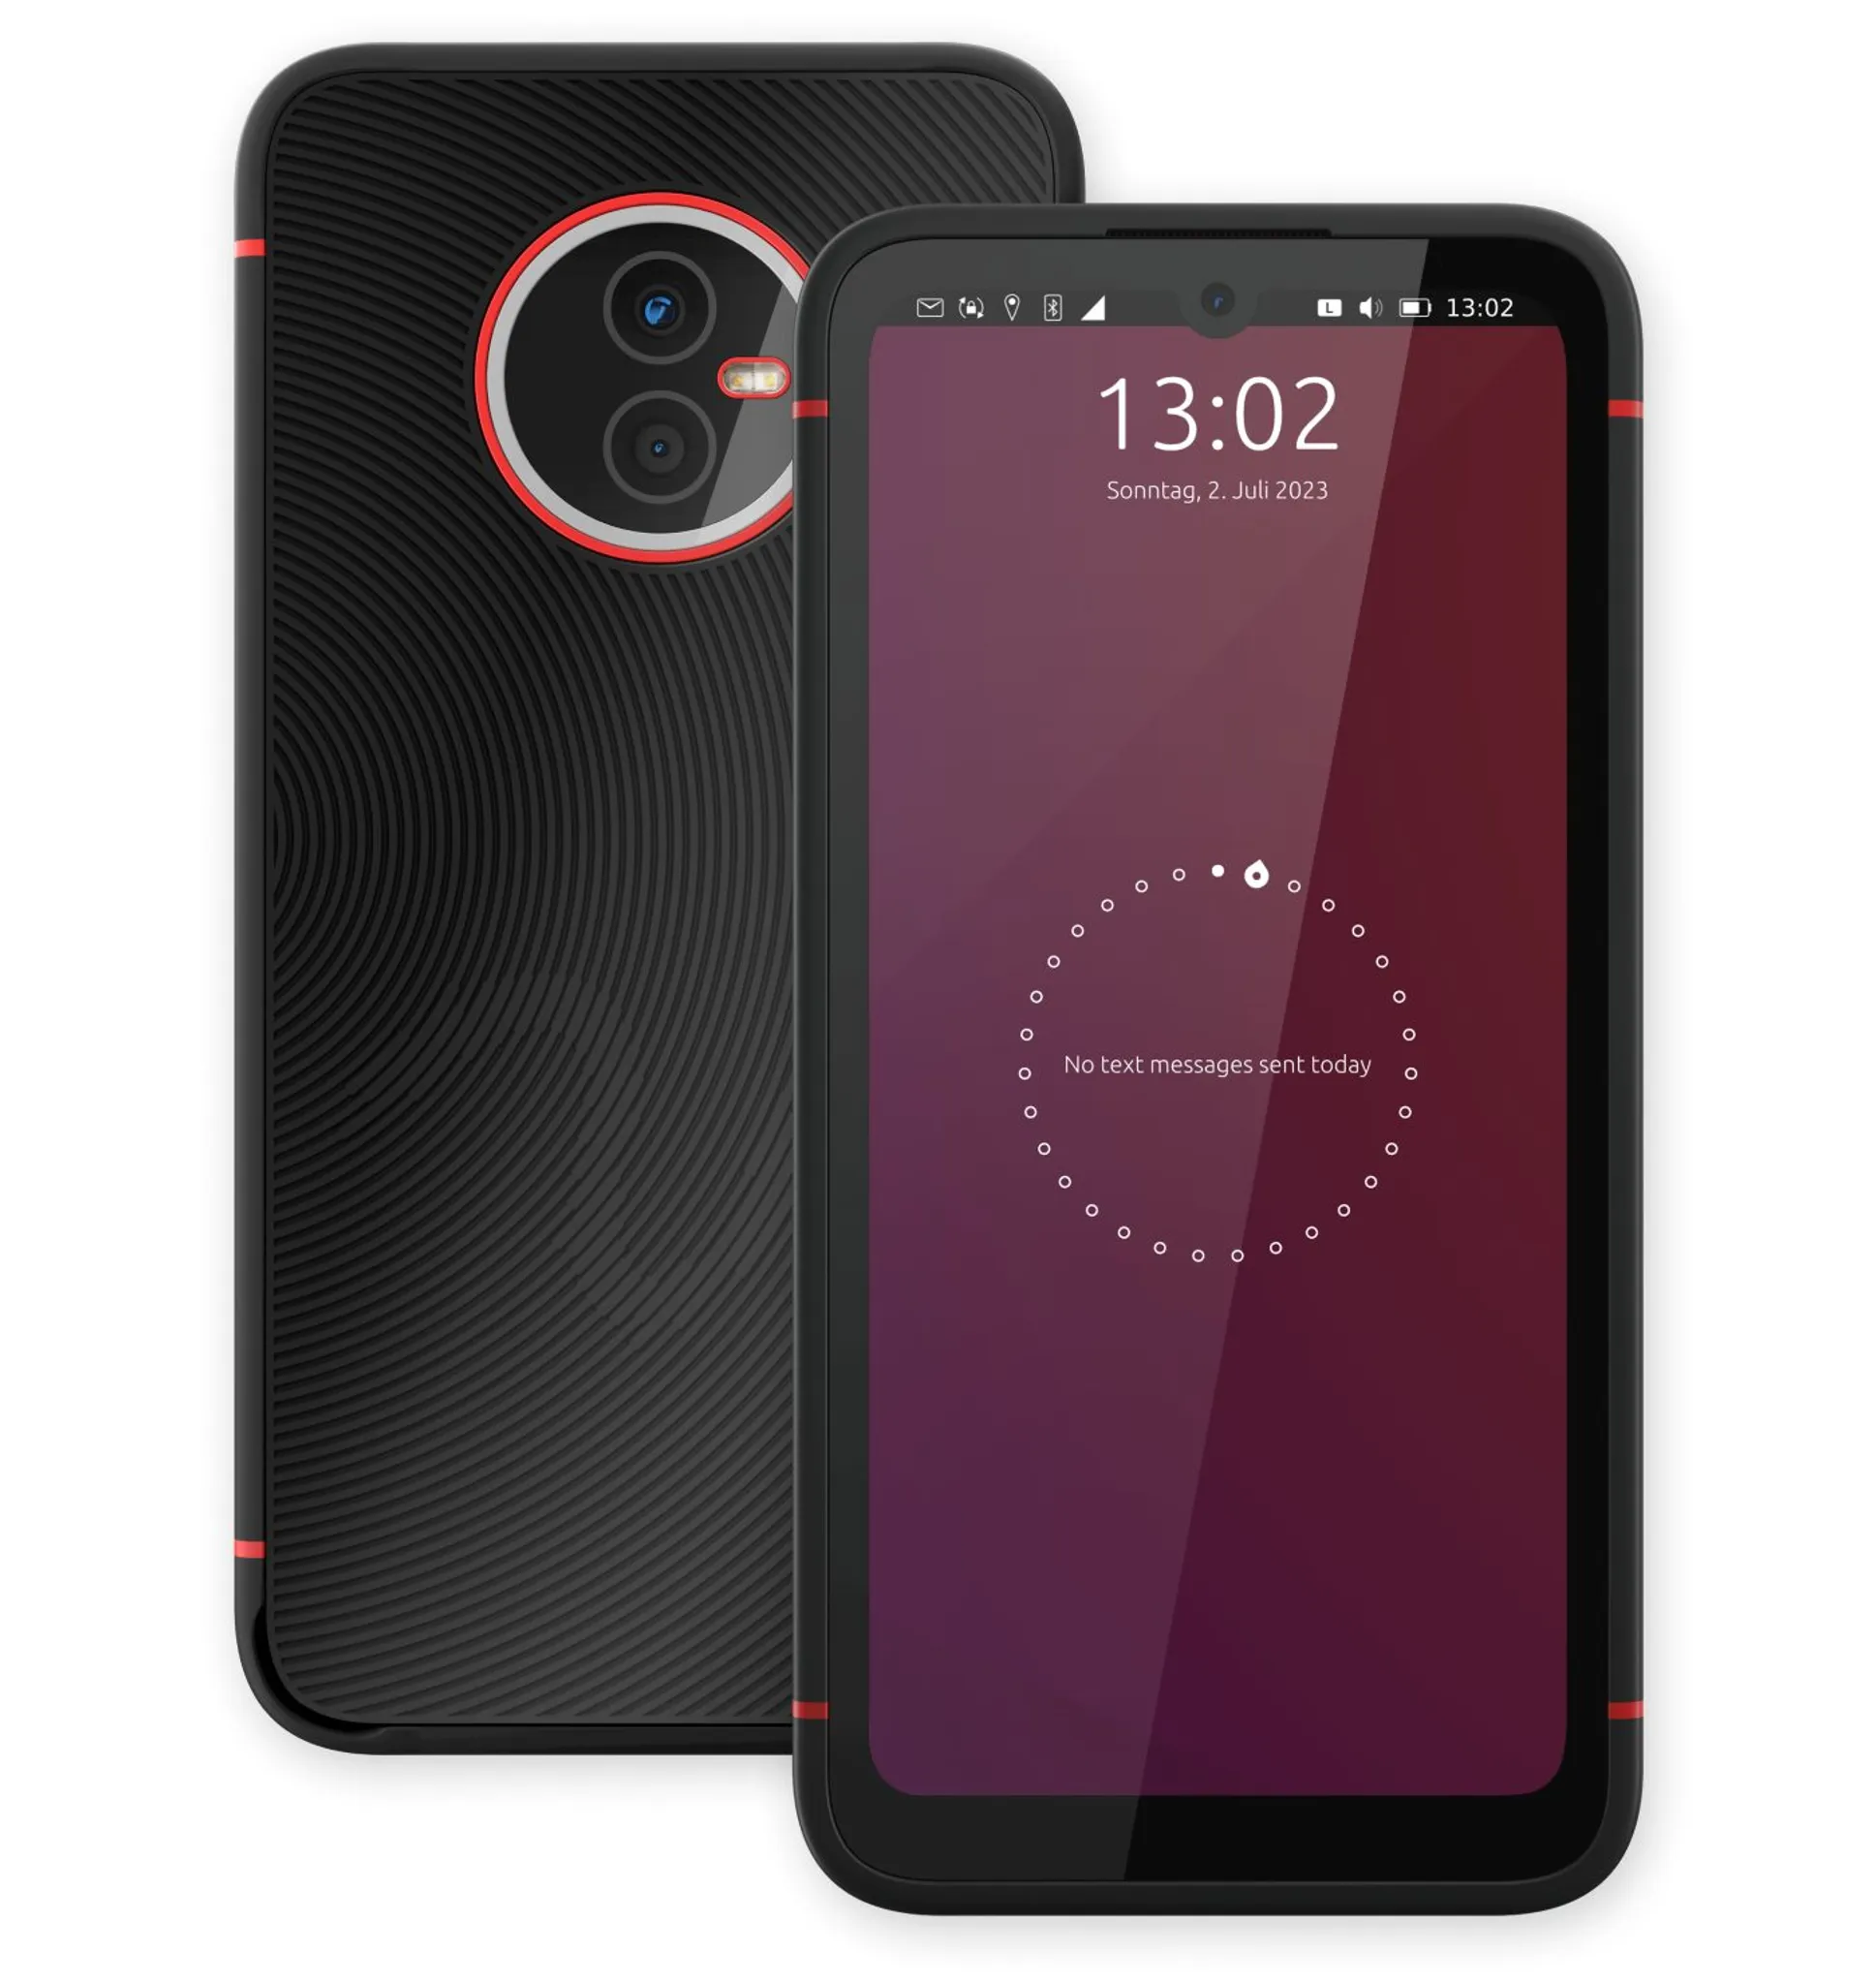 Volla Phone X23 Smartphone mit – Touch Ubuntu